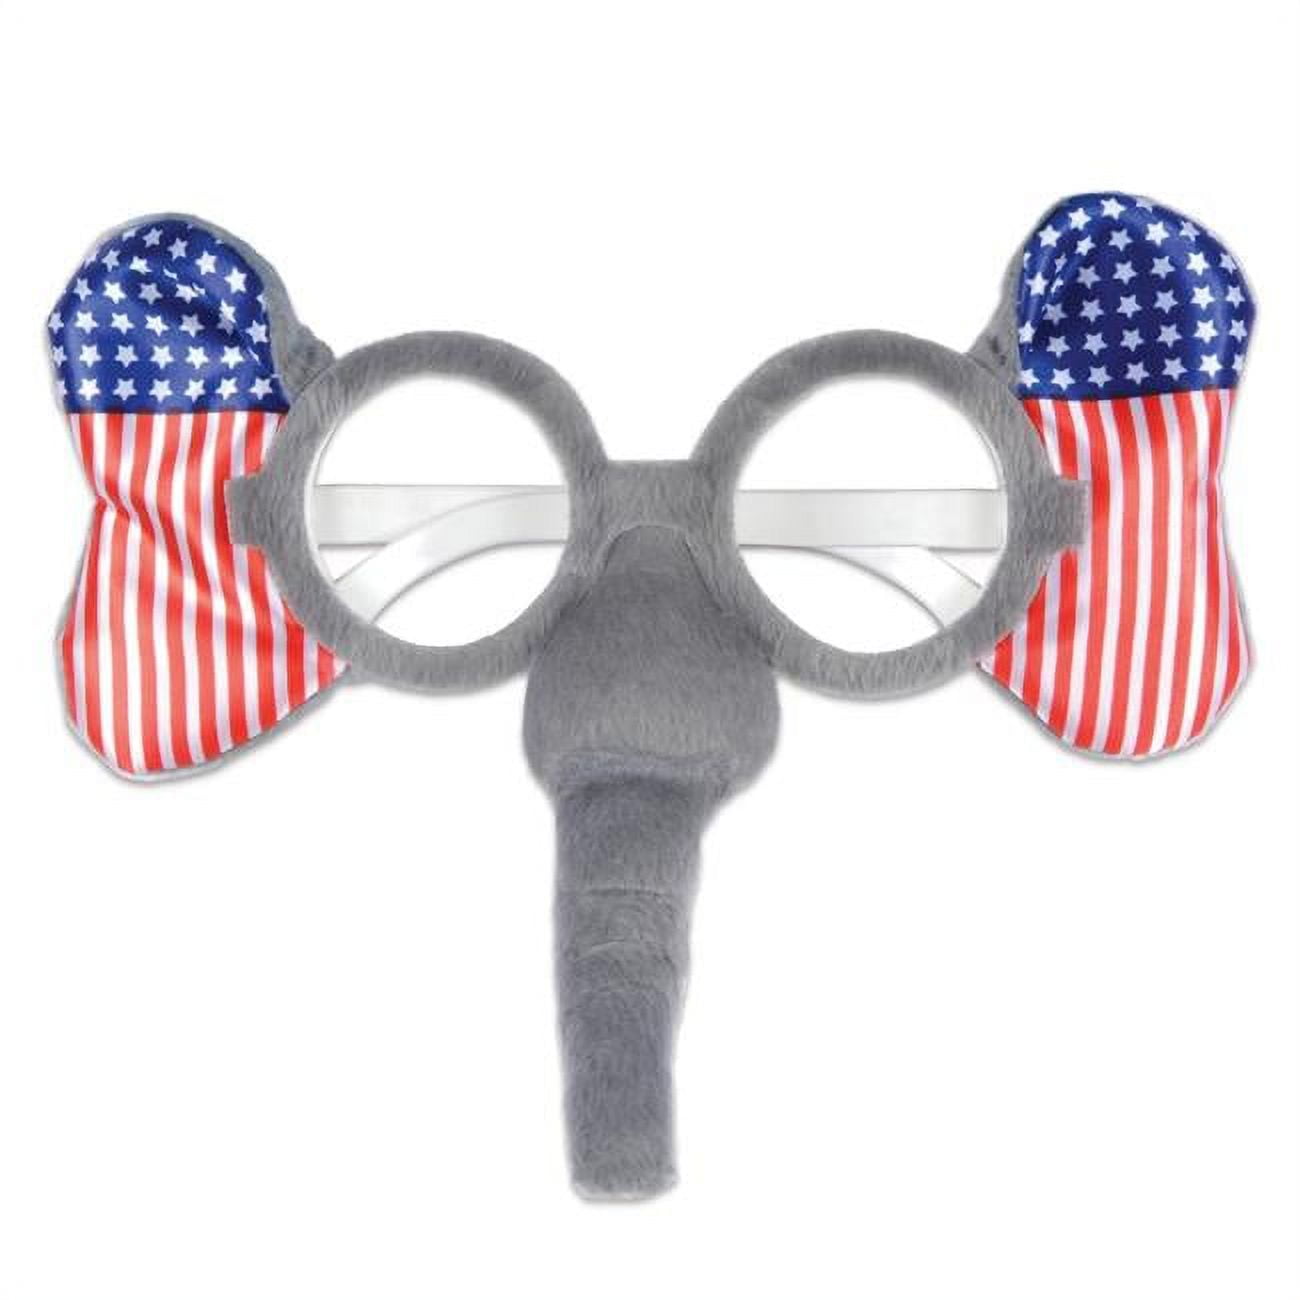 Picture of Beistle 53598 Patriotic Elephant Glasses